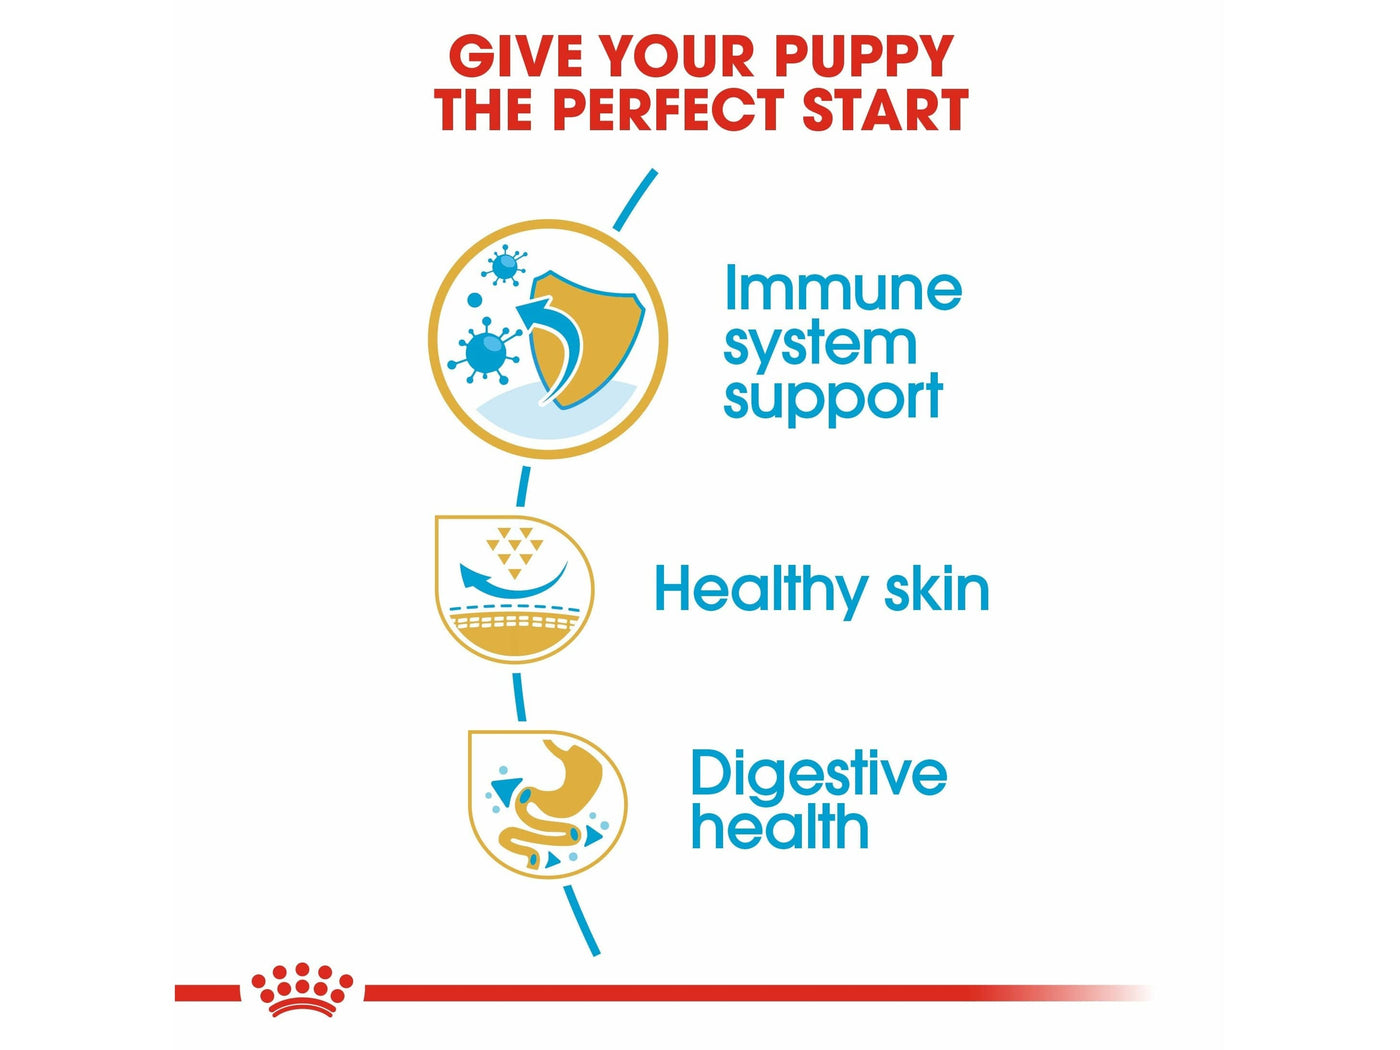 Breed Health Nutrition Pug Puppy 1.5 Kg